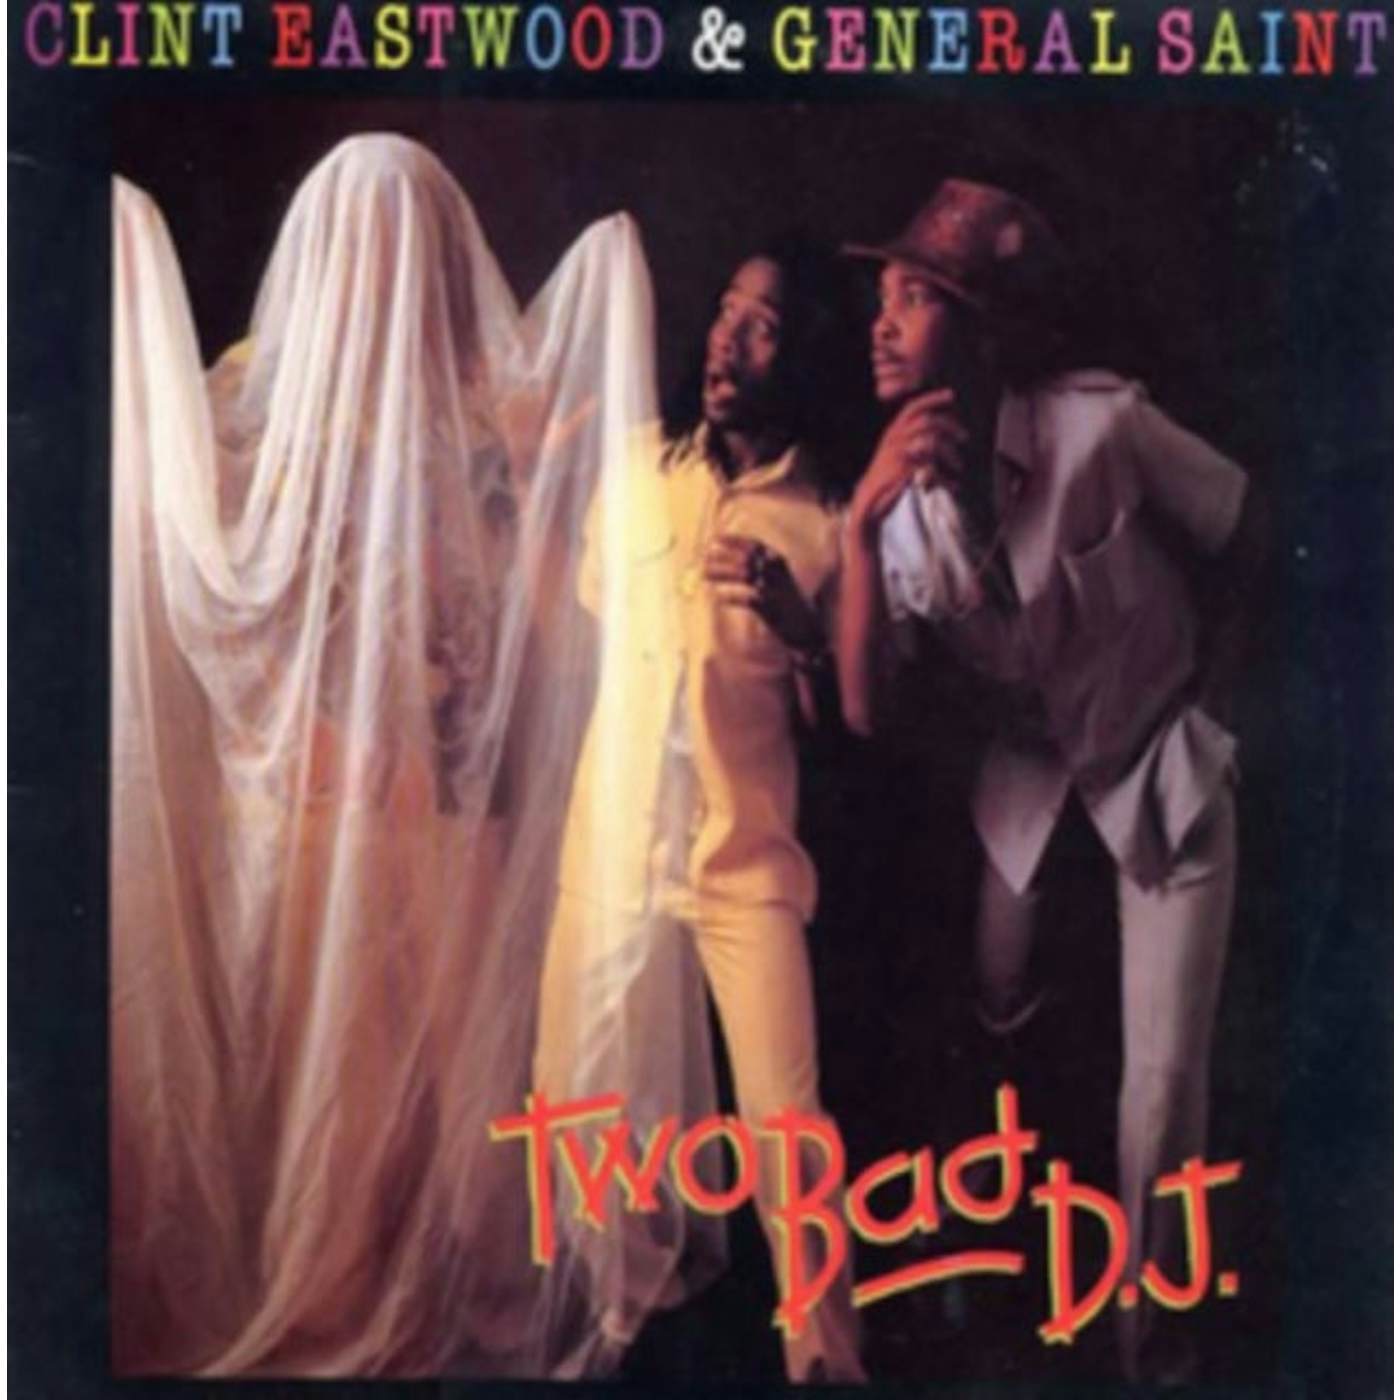 Clint Eastwood & General Saint LP - Two Bad D.J. (Vinyl)